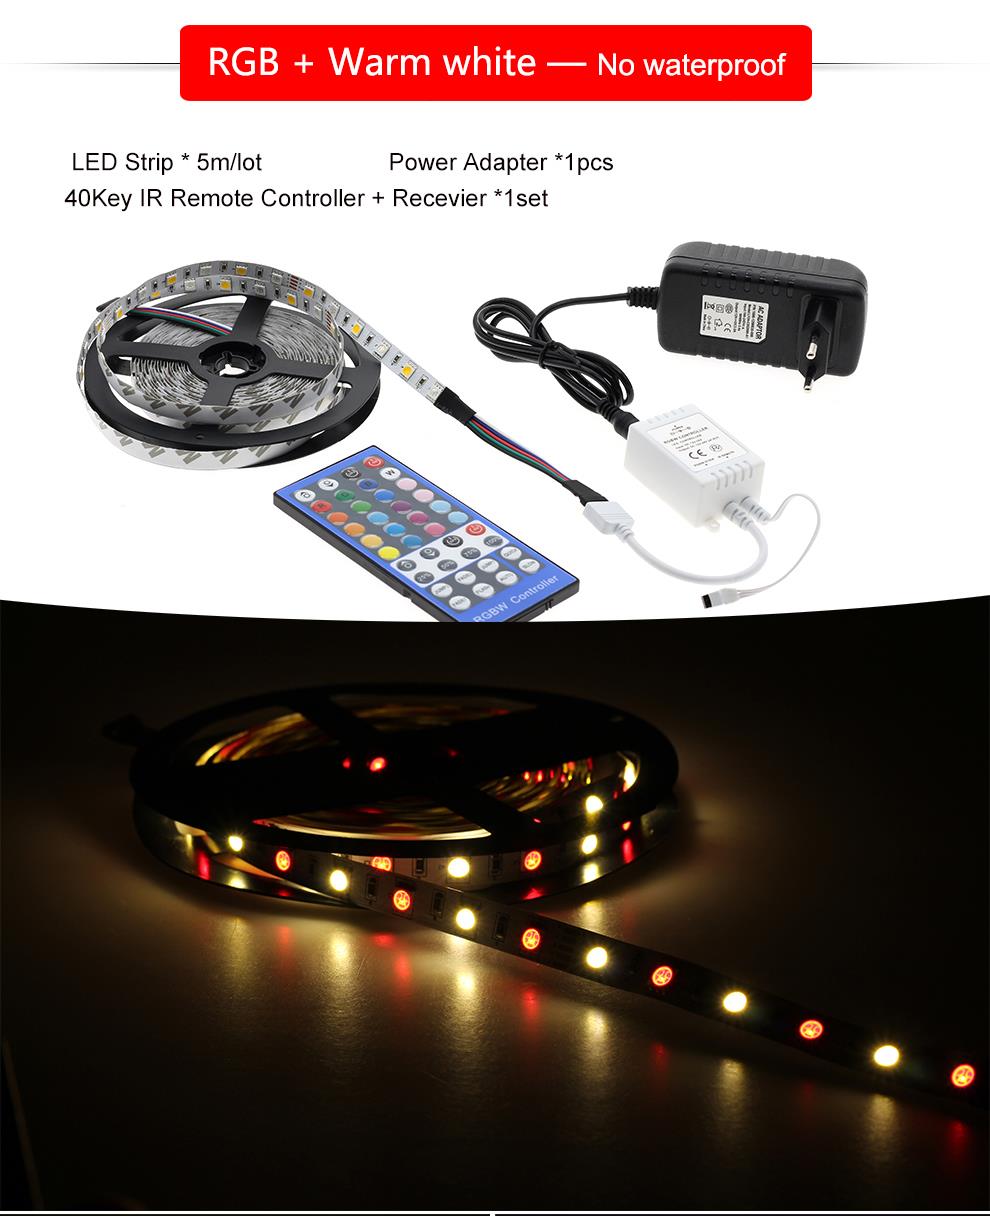 FEICAN LED Strip 5050 RGBW /RGBWW 5M 300LEDs Indoor Decorations Tape + 40Key IR Controller + DC 12V 3A Power Supply